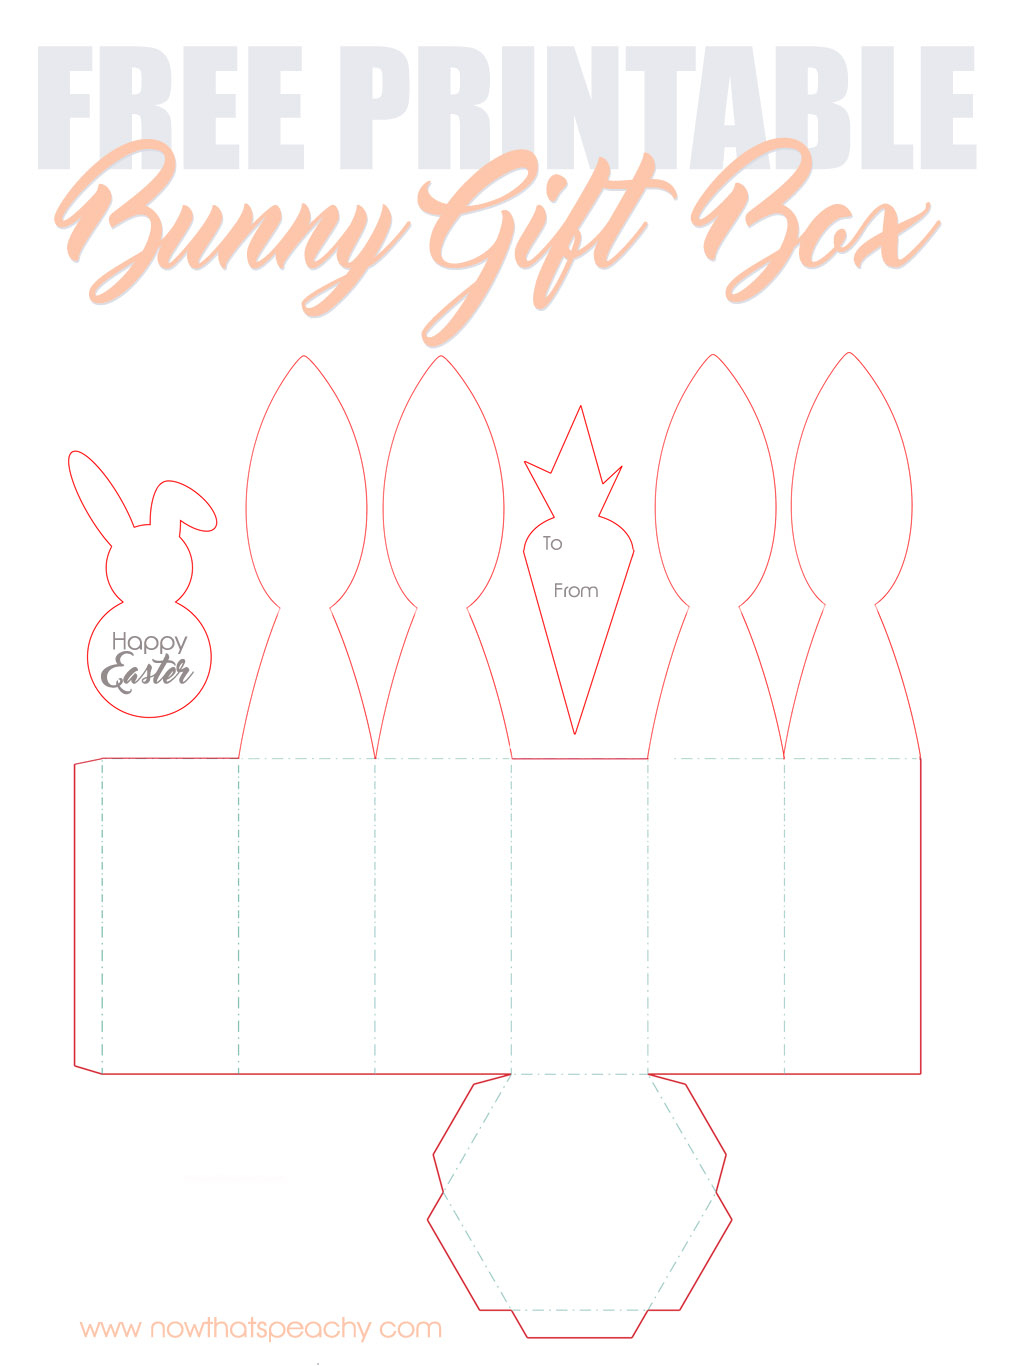 Free Bunny Ears Gift Box Printable For Easter | Now Thats Peachy - Free Printable Bunny Templates